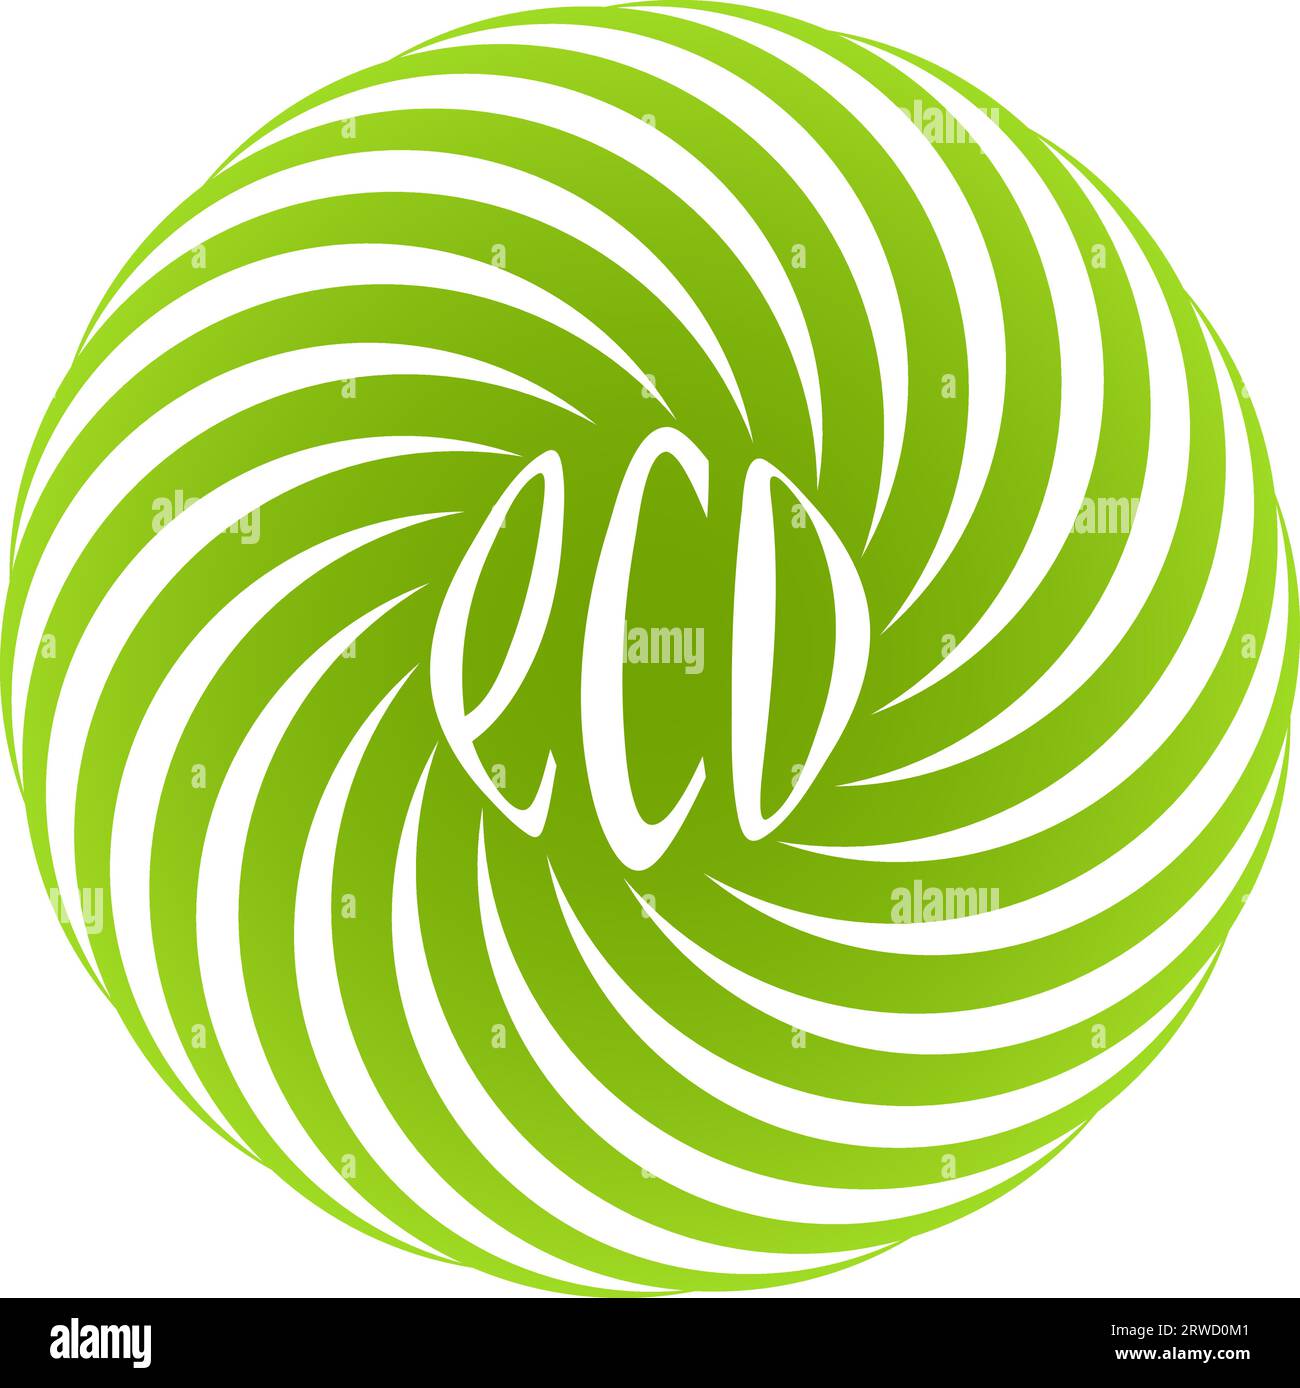 Logo-Shop natürliche Öko-Lebensmittel, spiralförmiger grüner Kreis, caligraph Stock Vektor